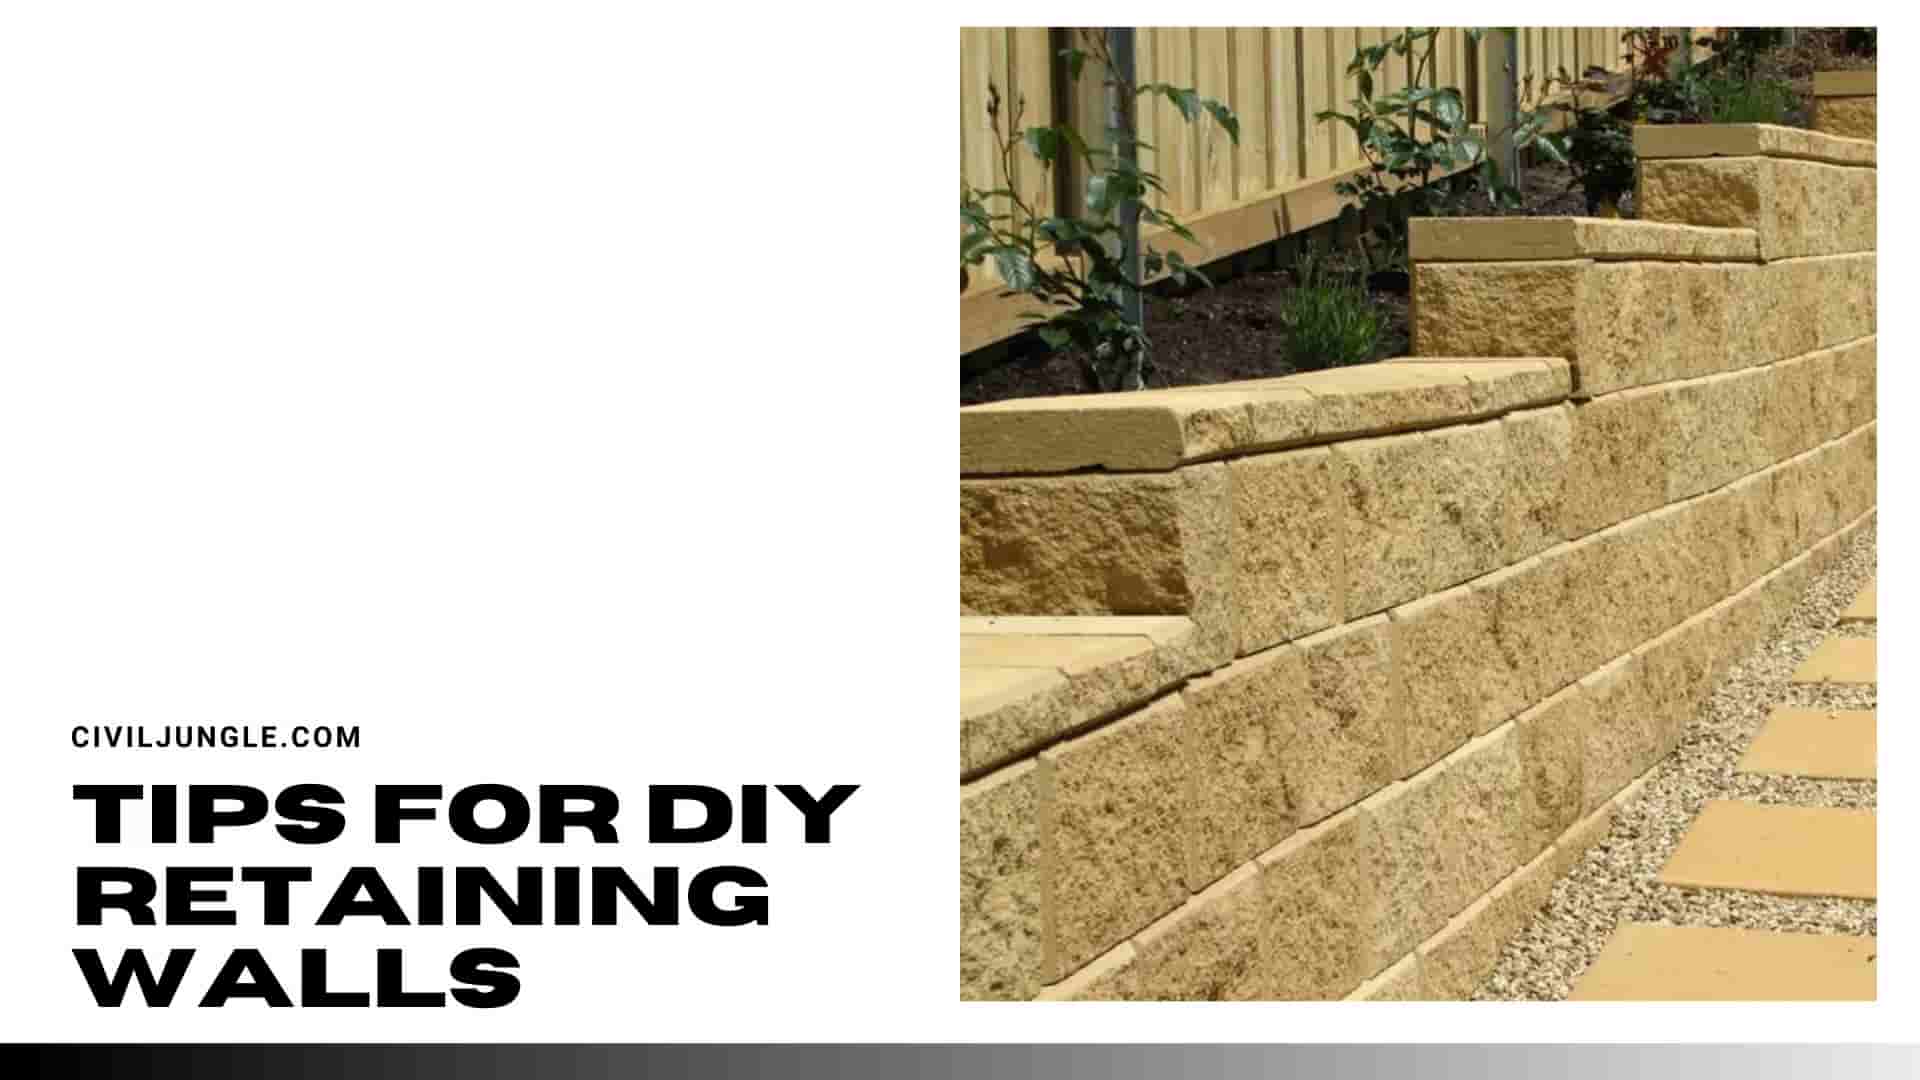 Tips for Diy Retaining Walls